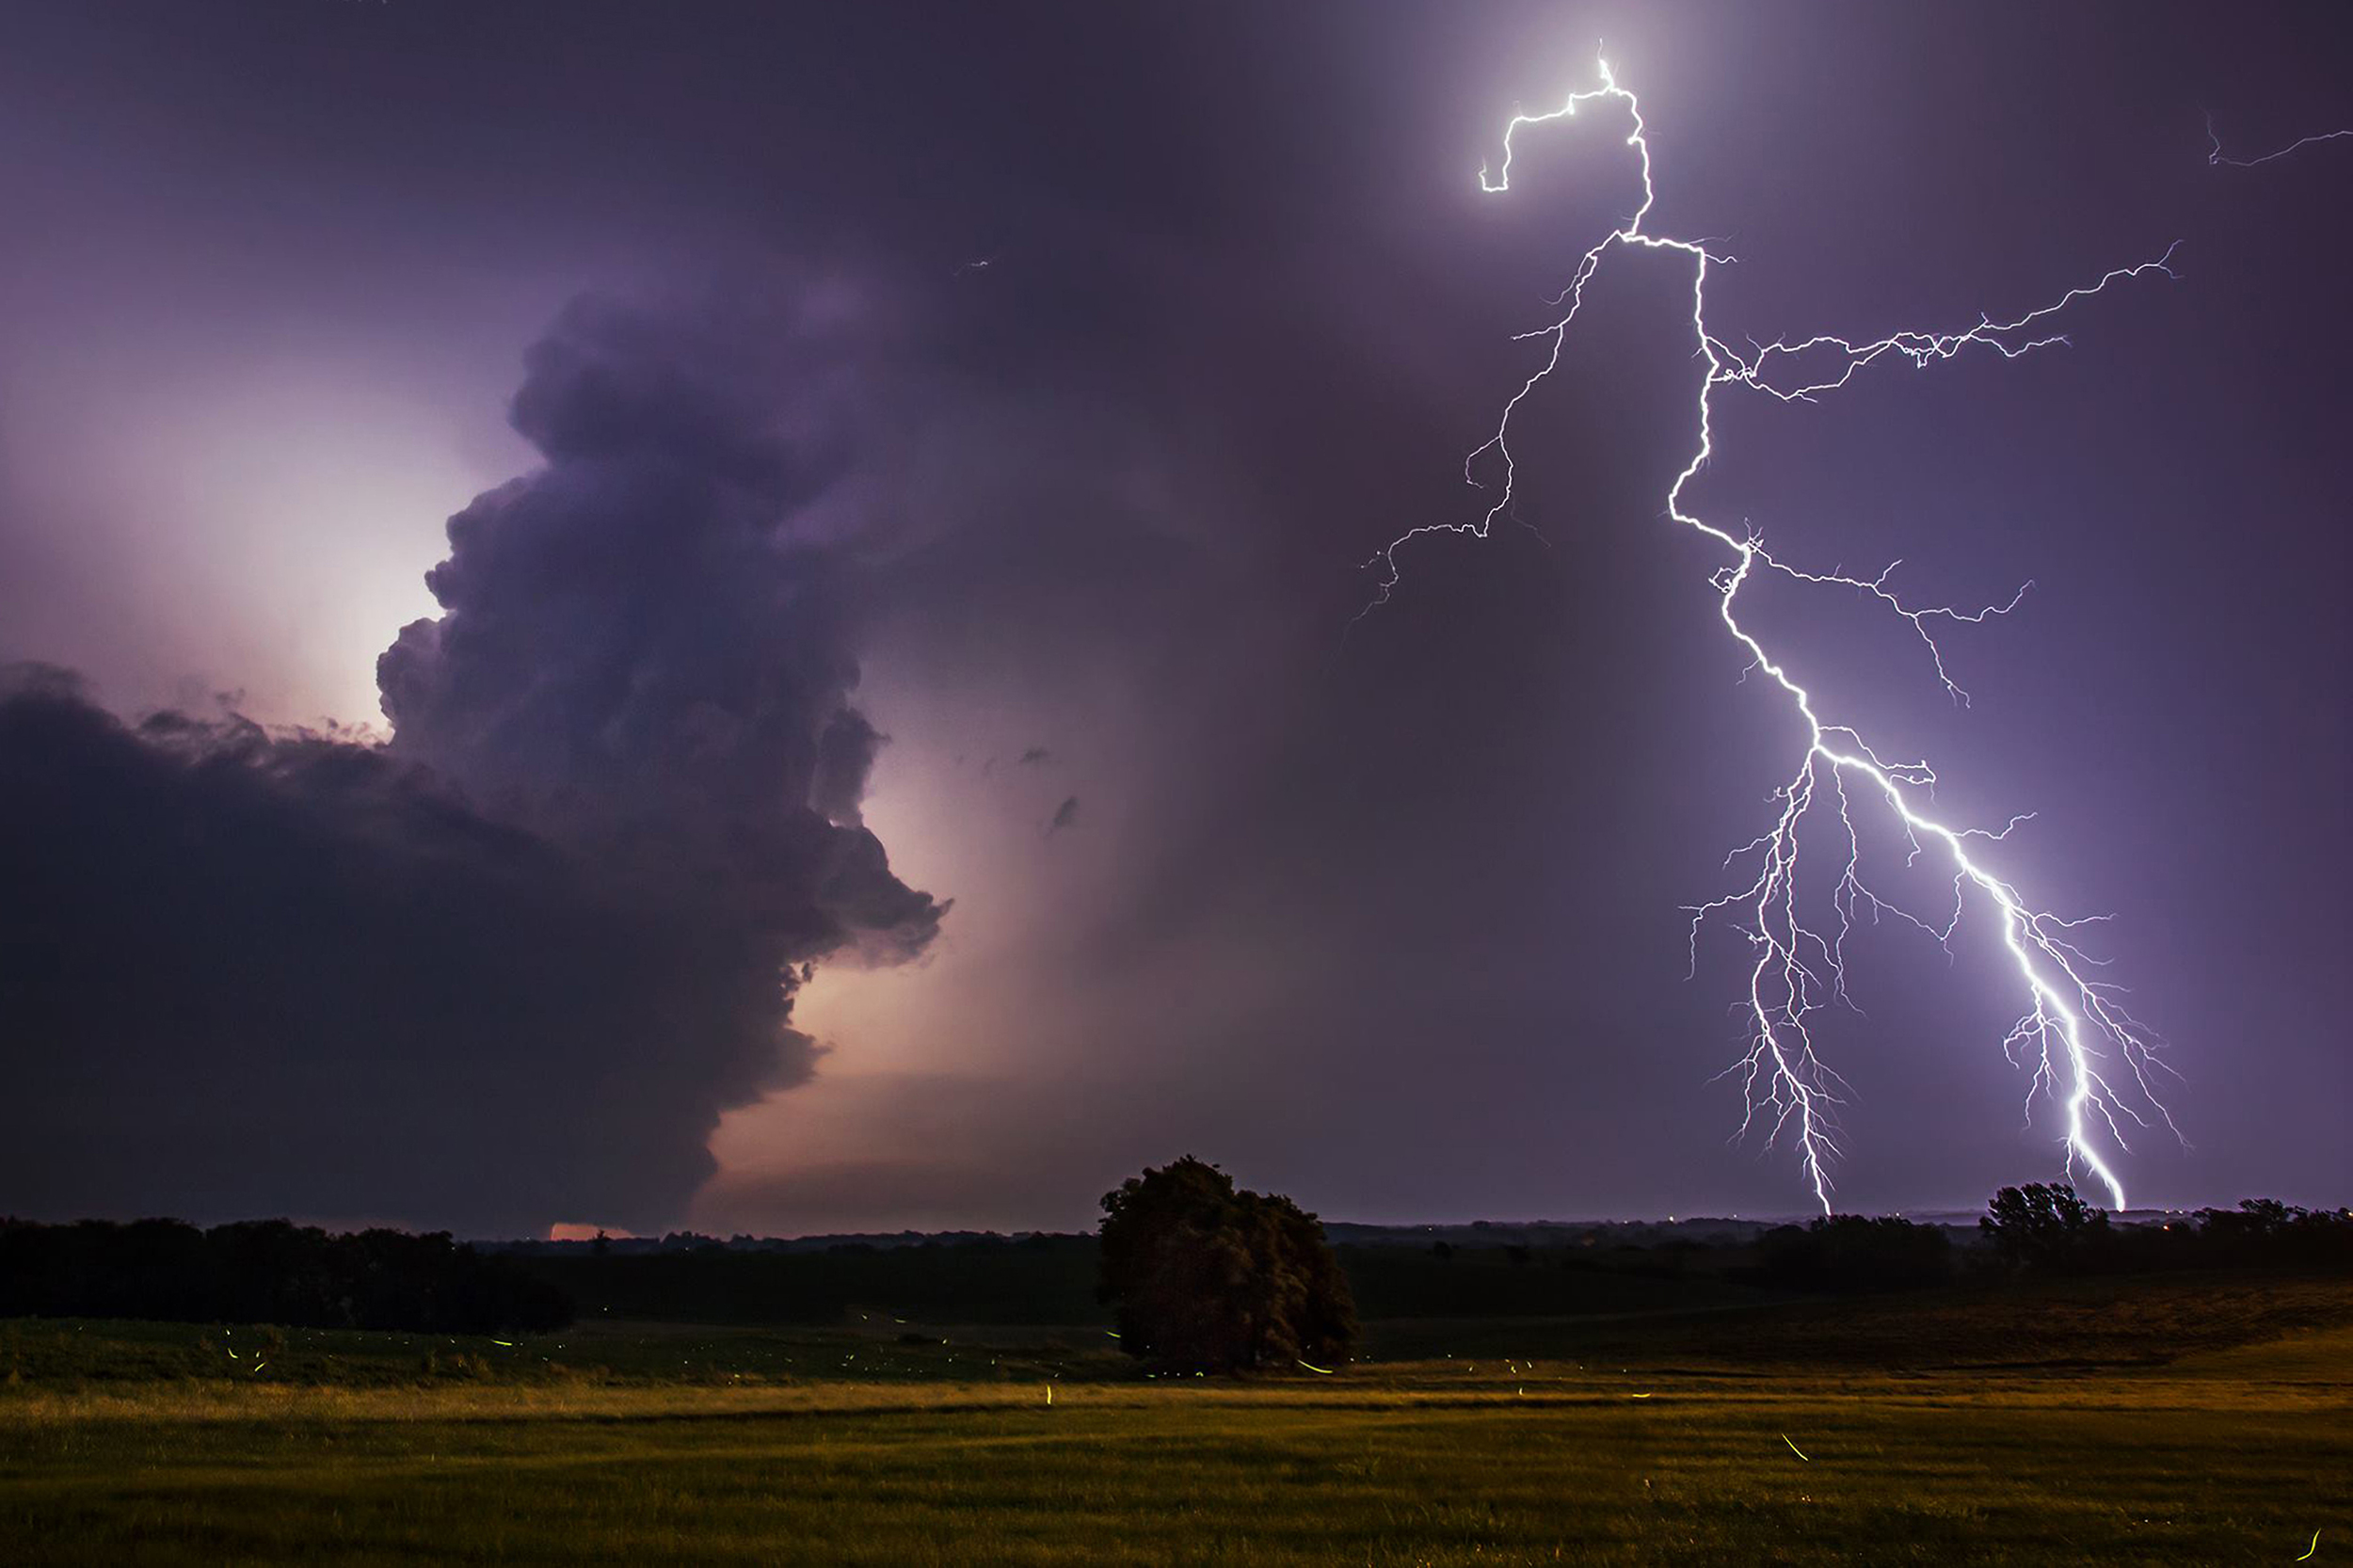  Mesocyclone and +CG lightning in Weston, Missouri on June 29, 2014 